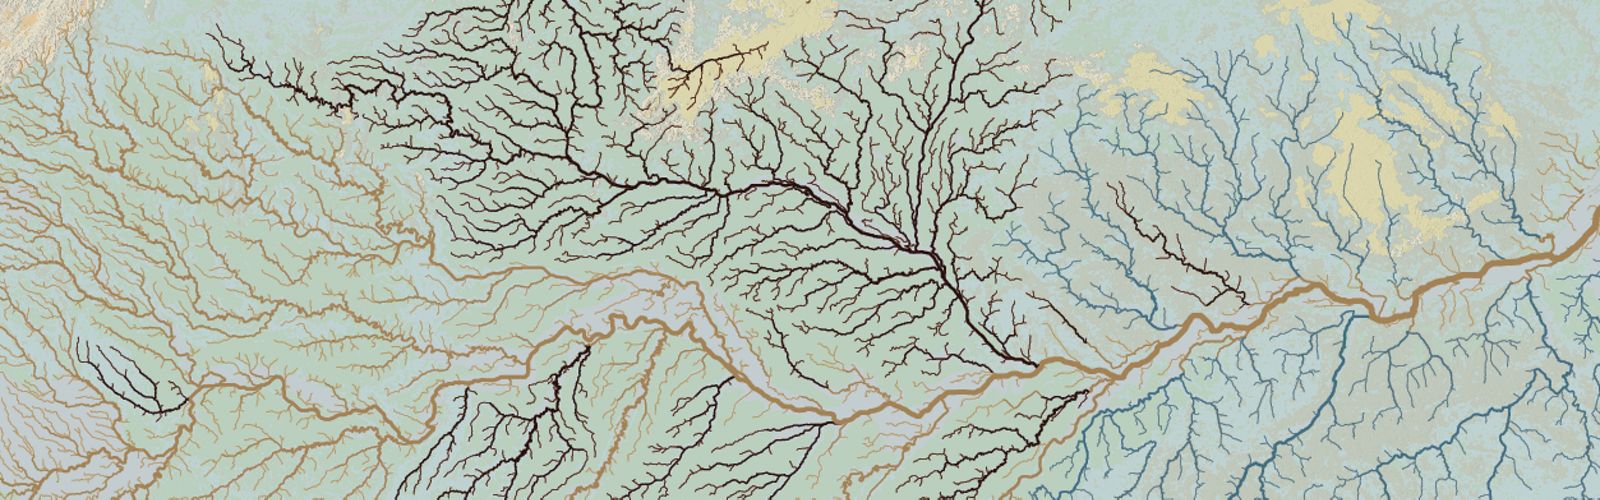 Cartographic map of Amazon basin.